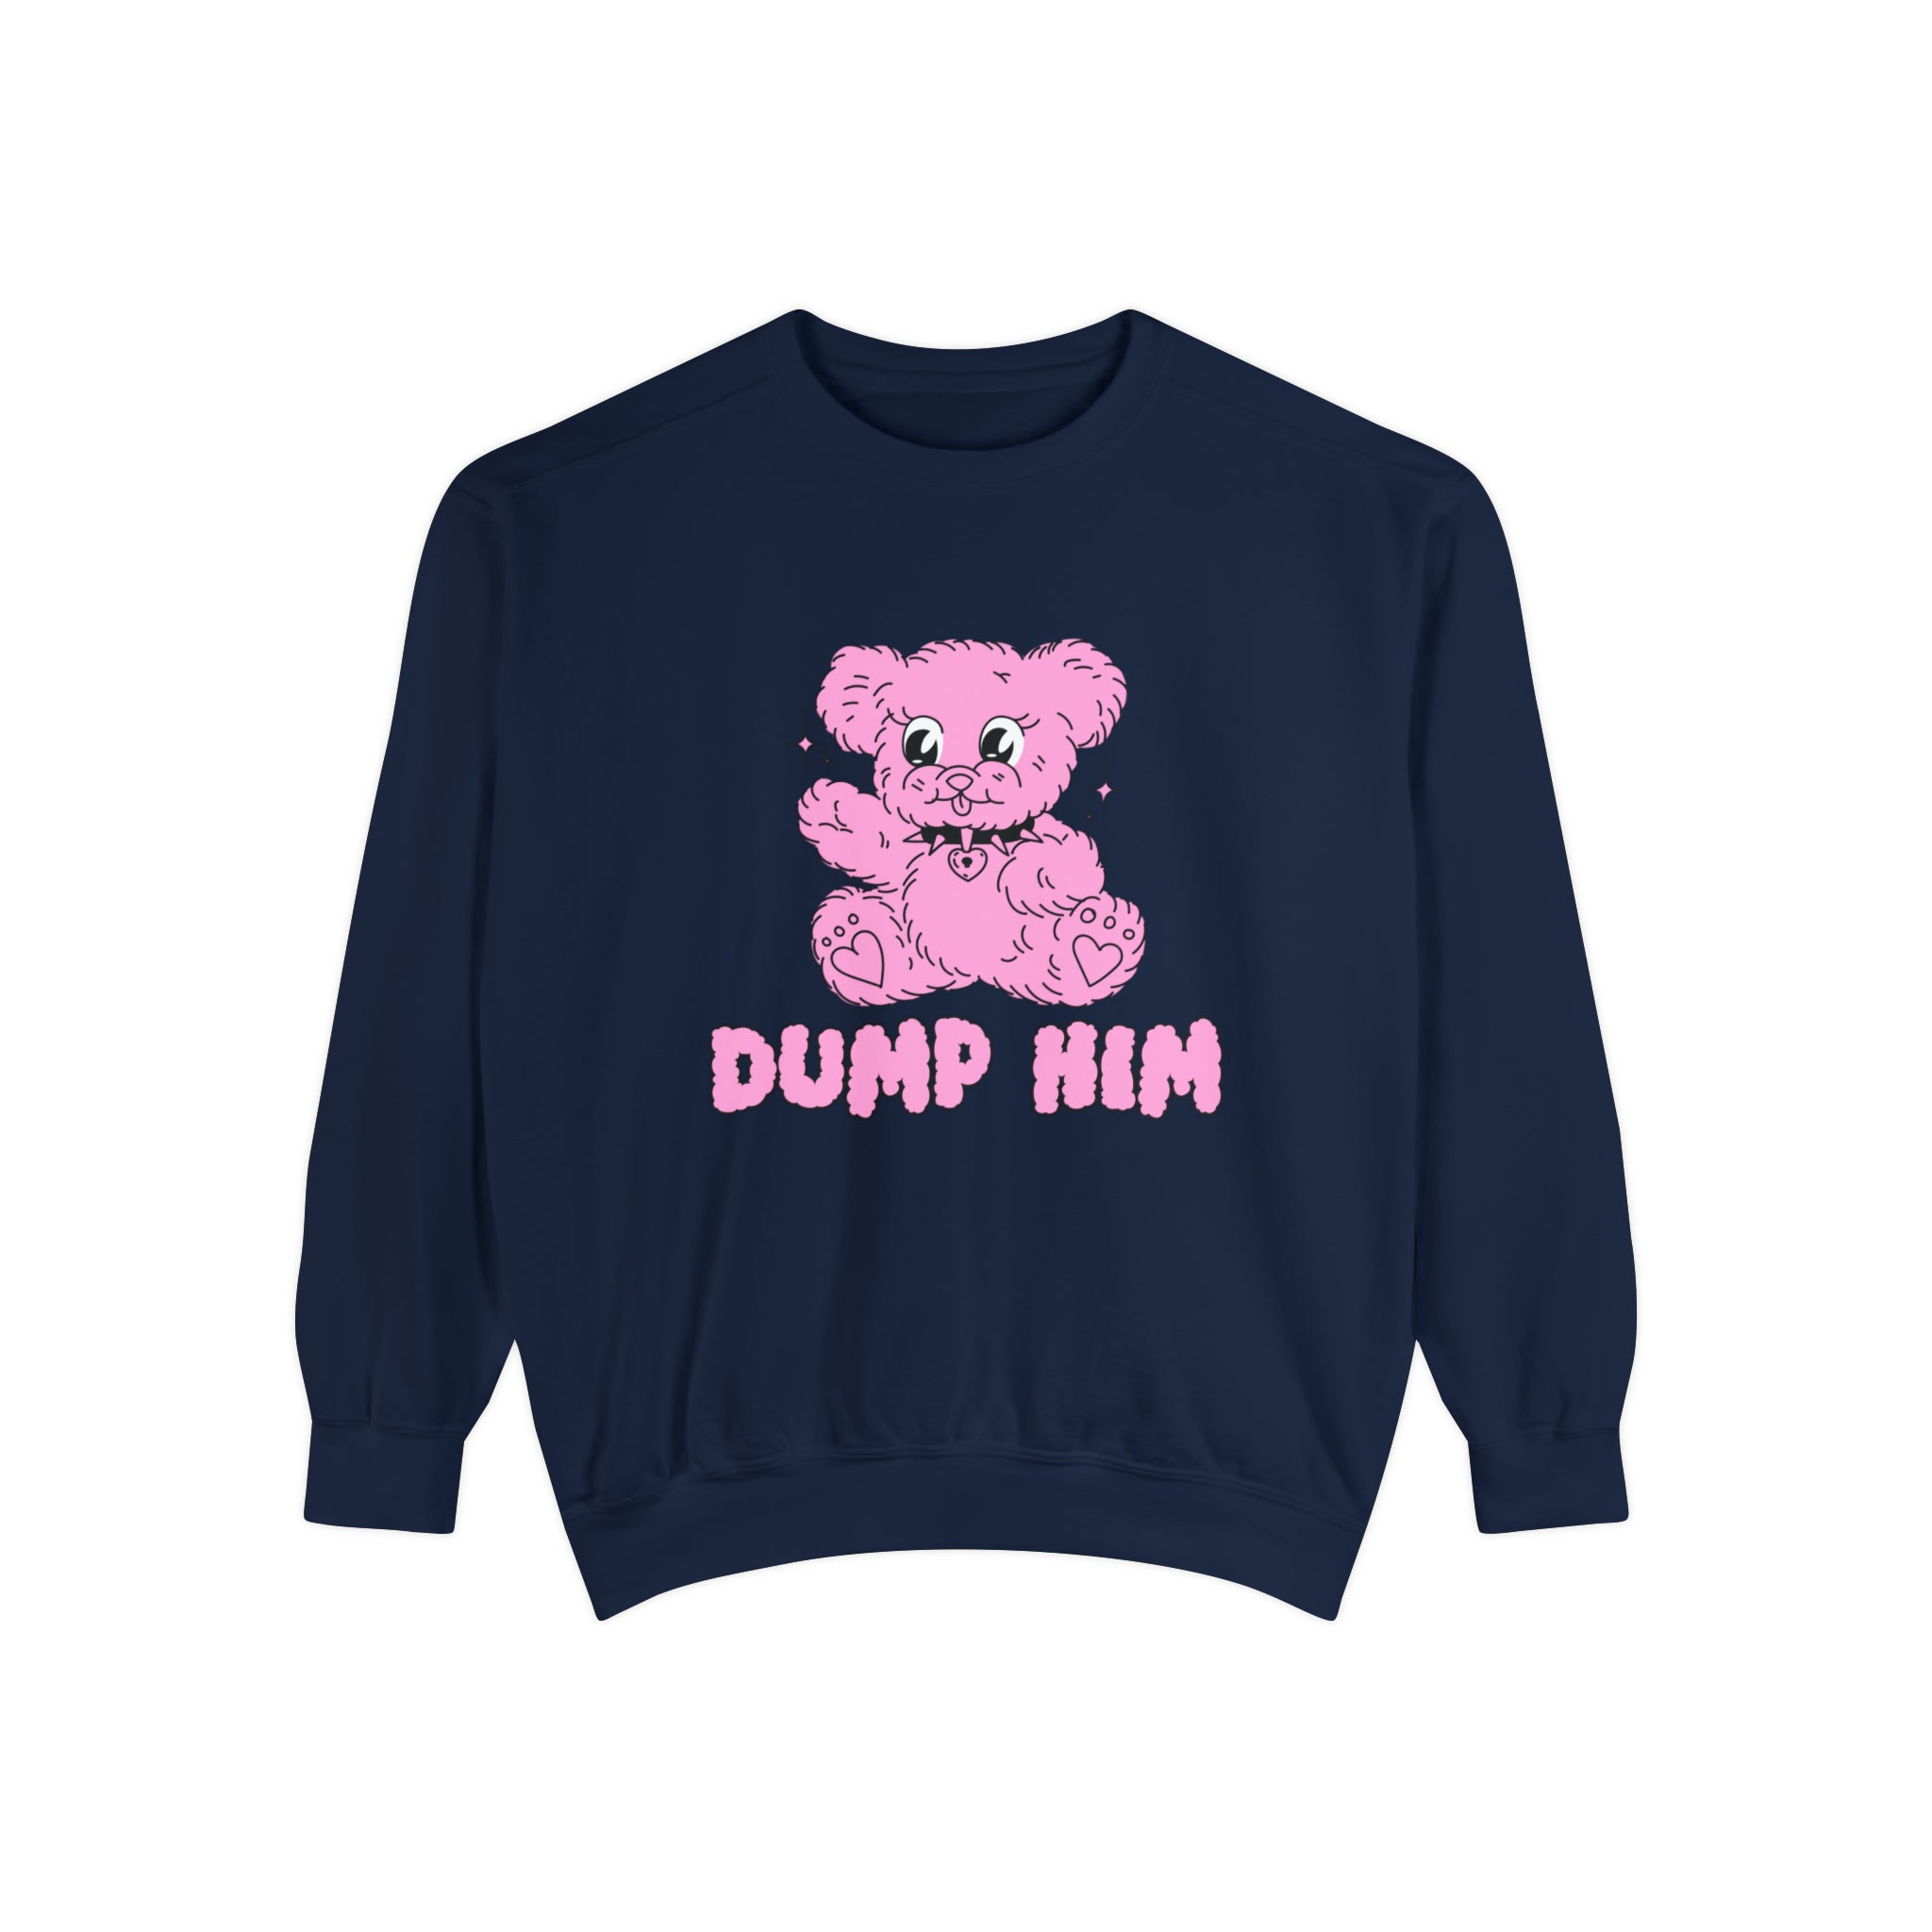 Dump Him Comfort Colors Crewneck Sweatshirt